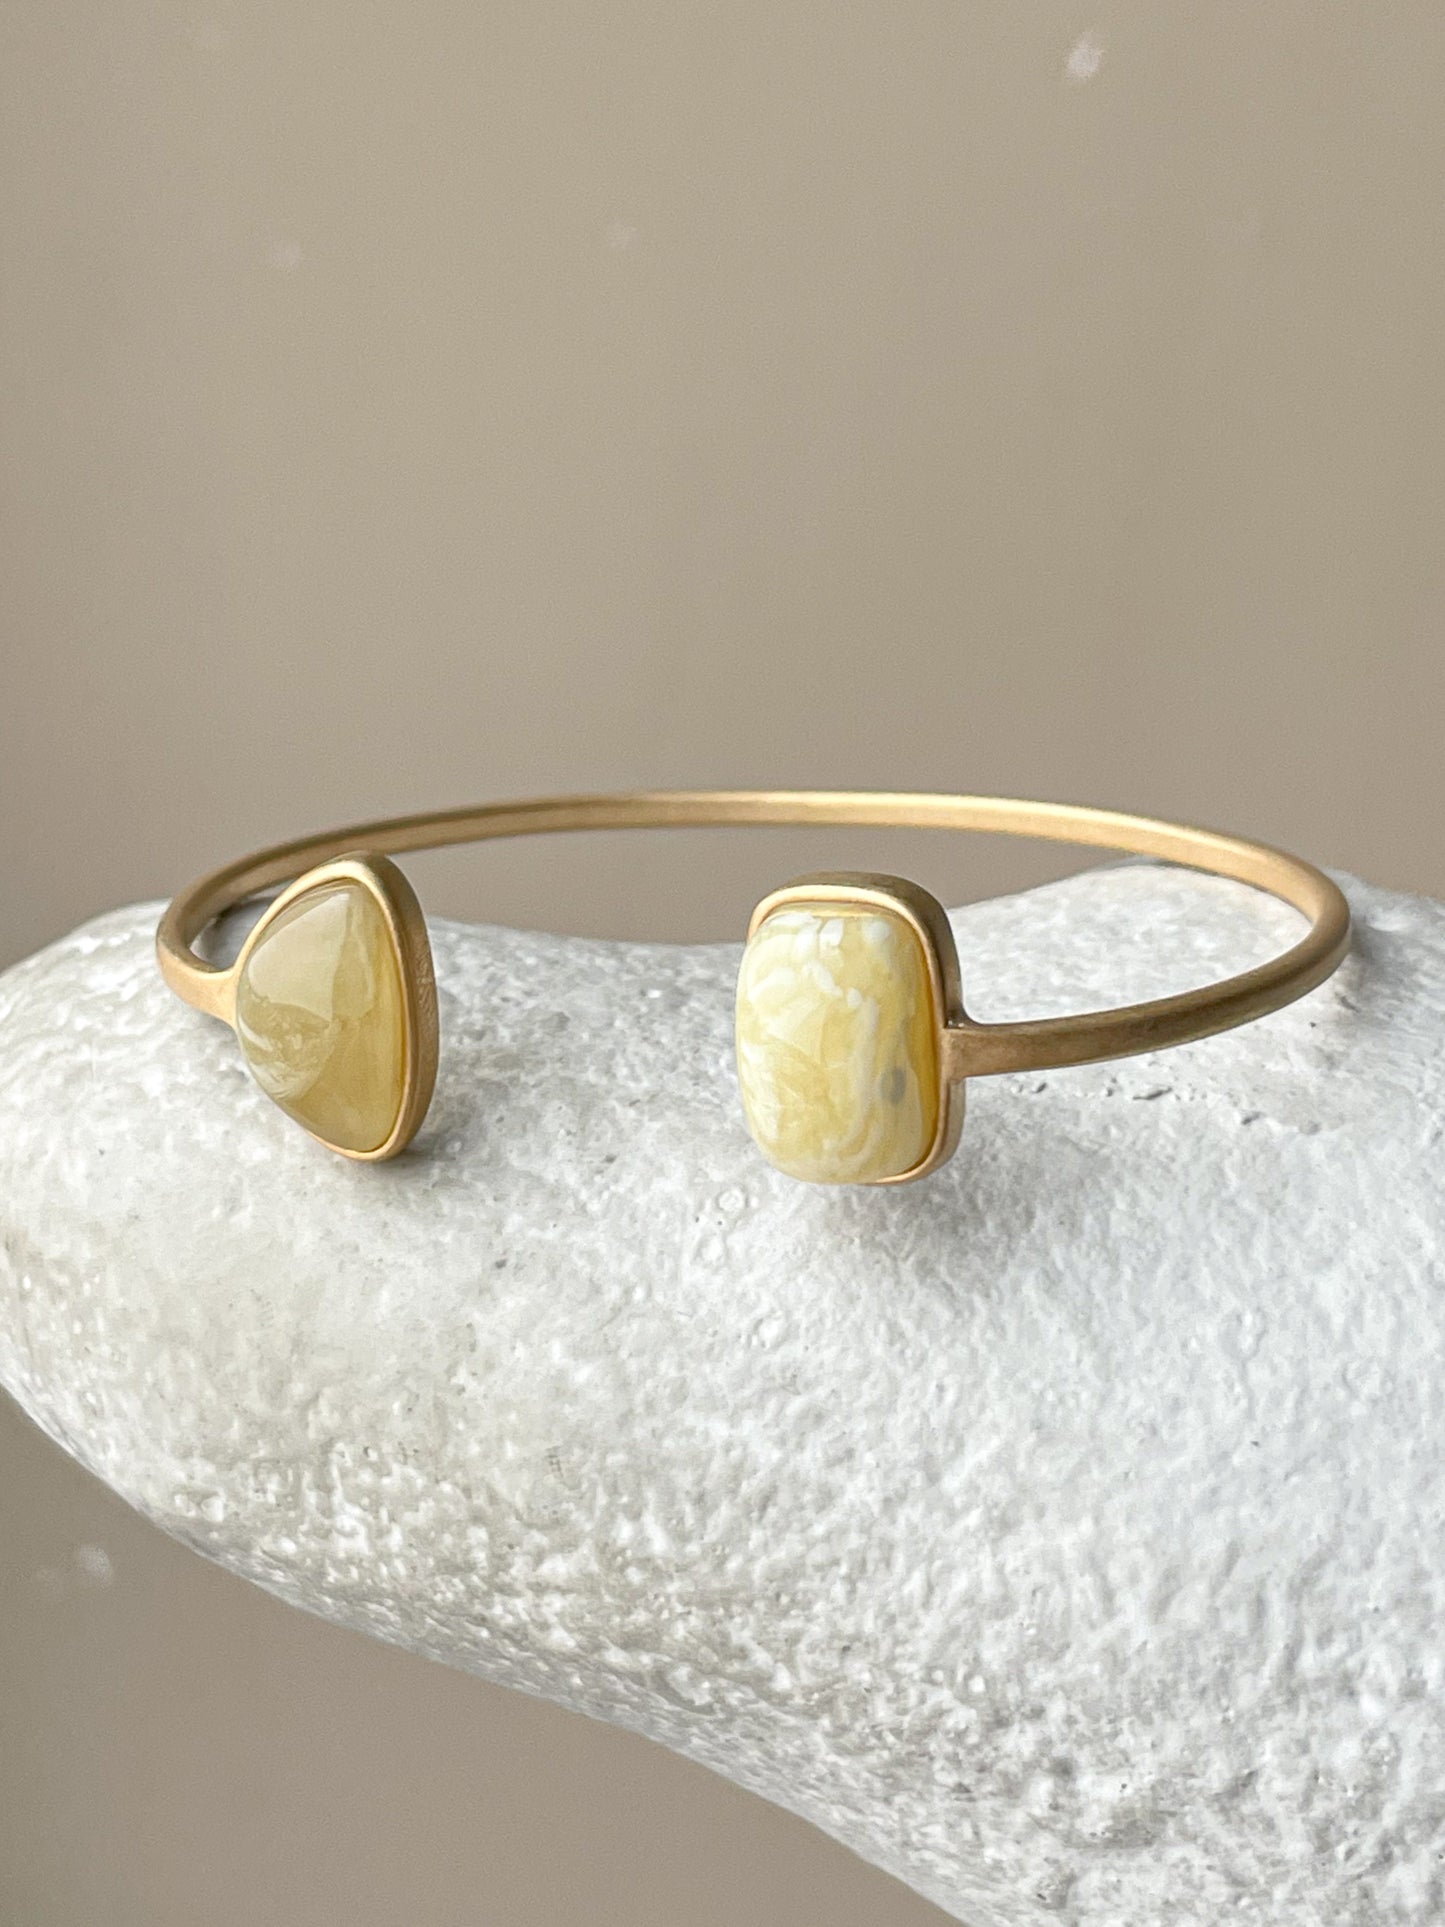 Amber bracelet - Gold plated silver - Cuff bracelet collection - Size 6.5